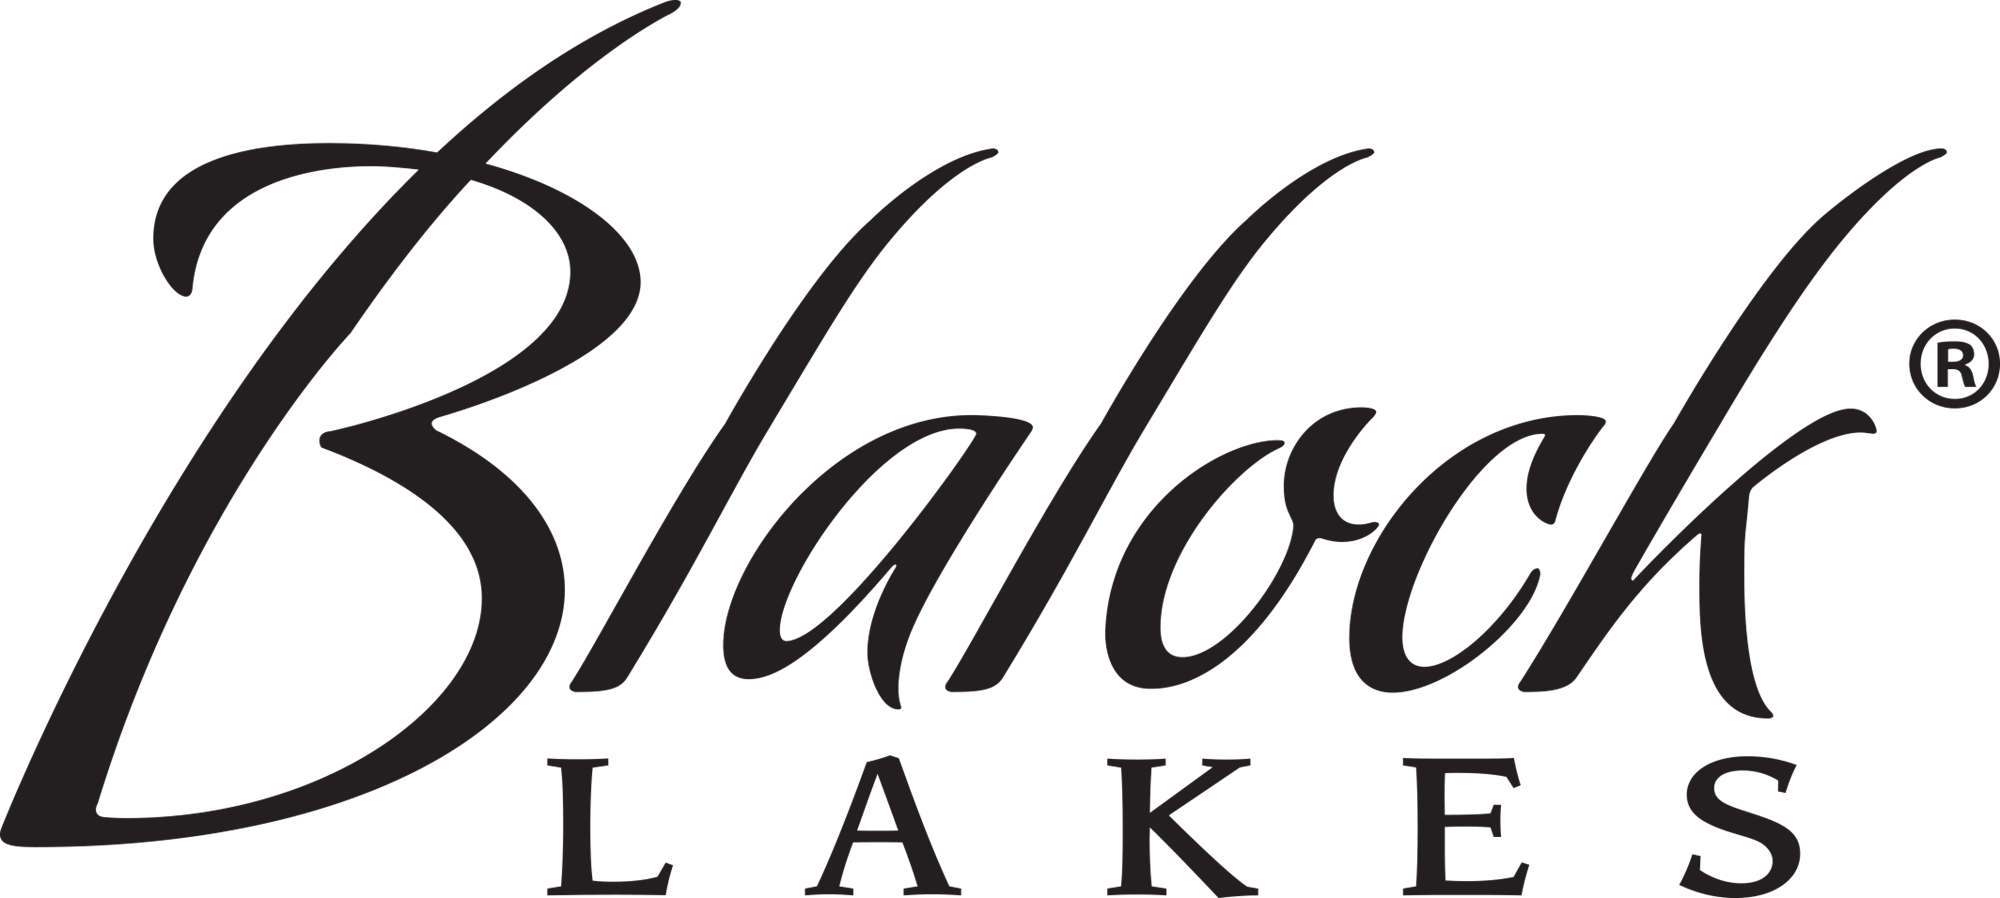 Blalock Lakes